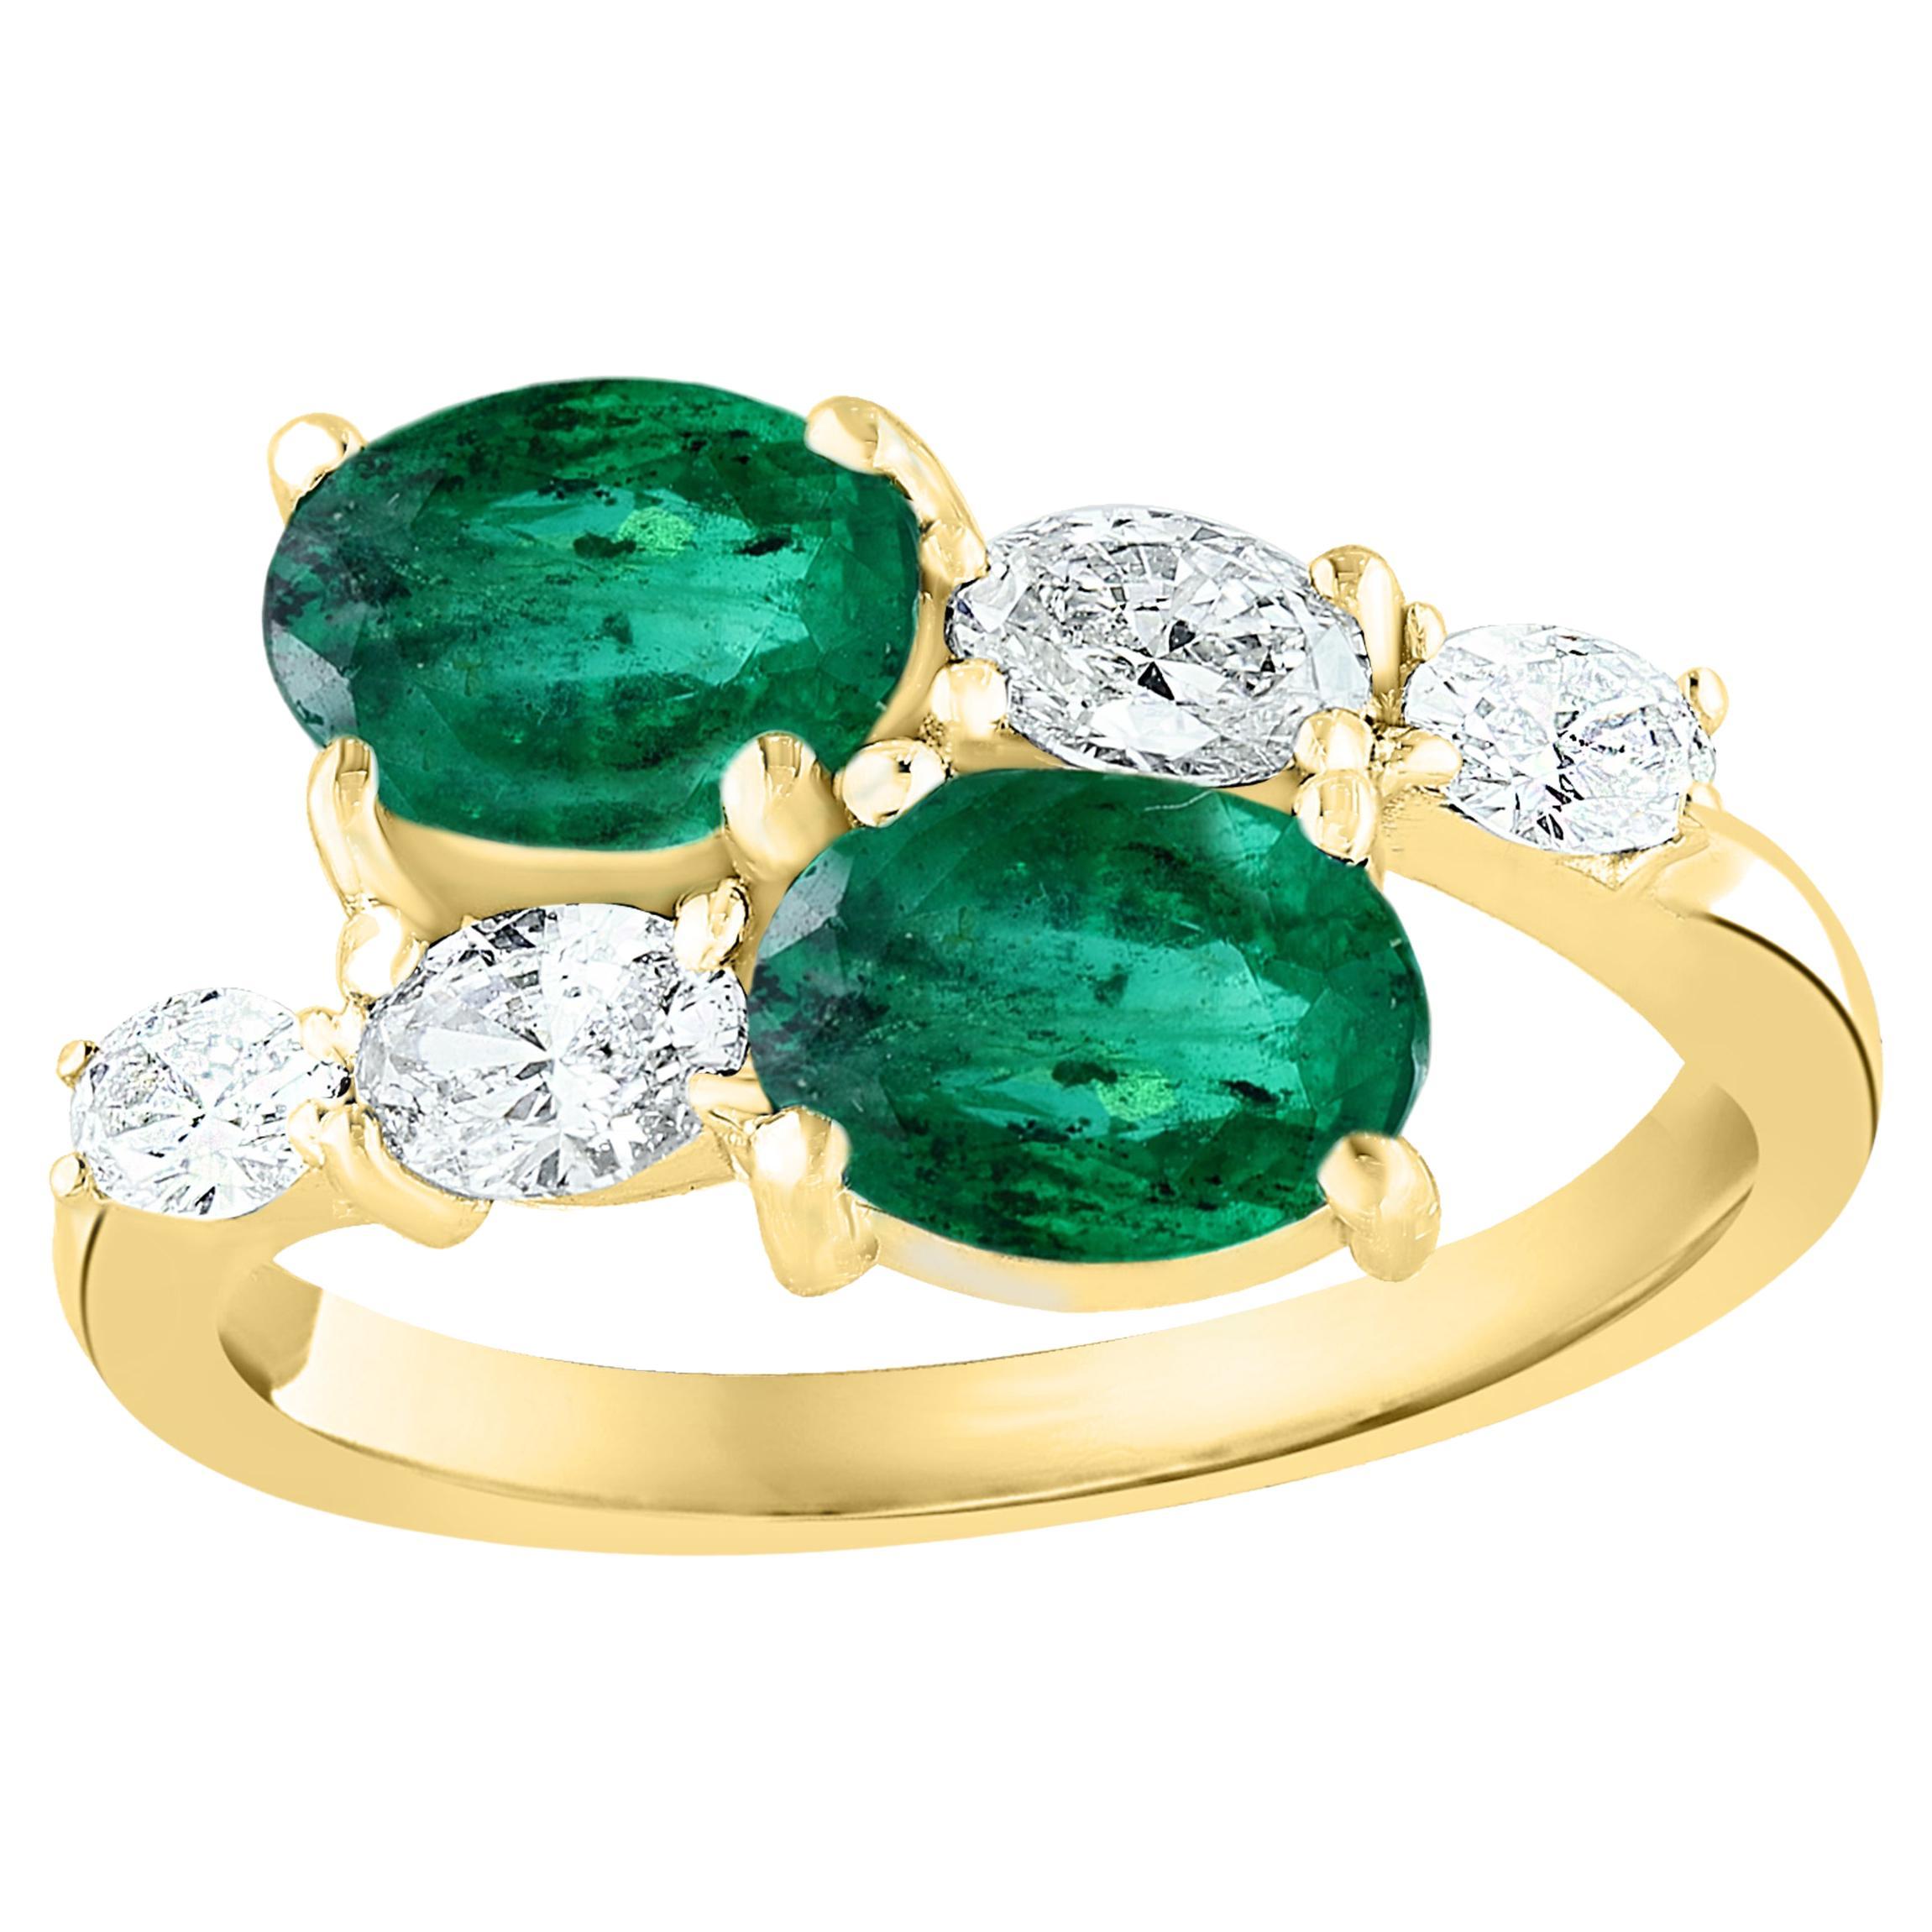 1.54 Carat Oval Cut Emerald Diamond Toi Et Moi Engagement Ring 14K Yellow Gold